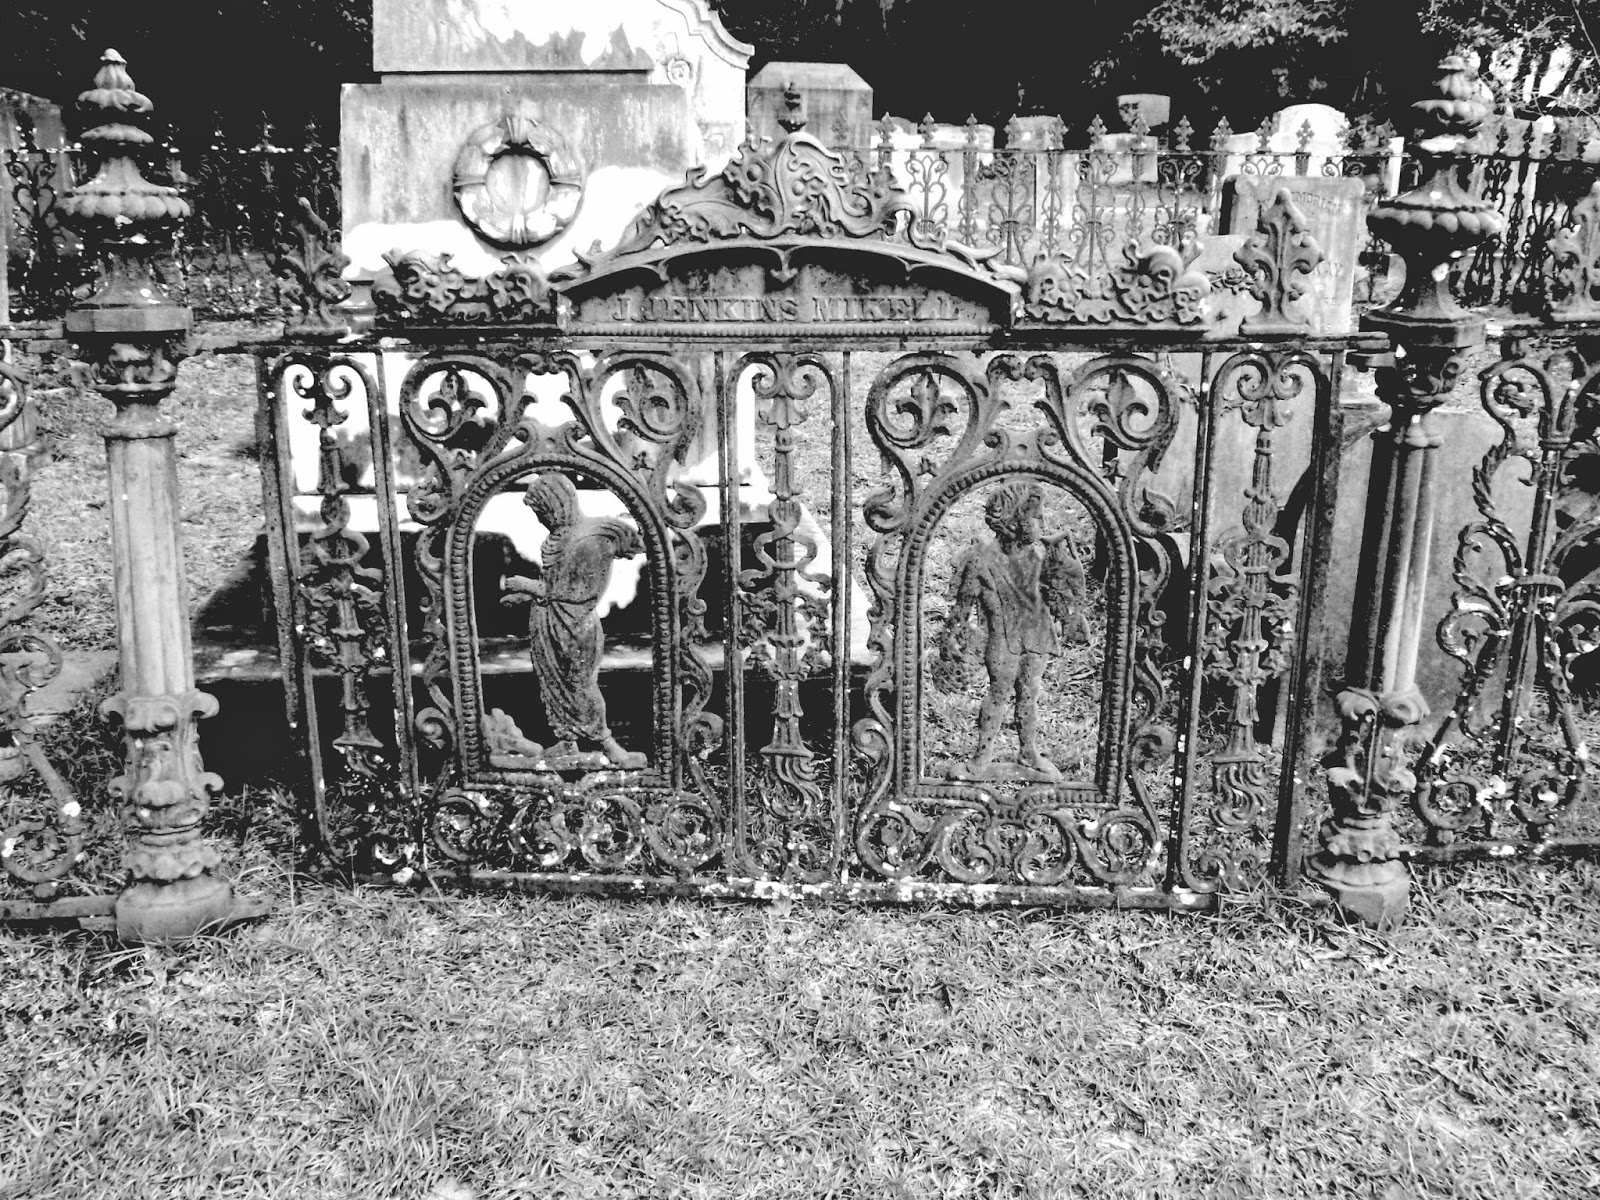 Edisto Presbyterian Church: Live Oaks, Southern History, and the Ghost of Julia Legare | CosmosMariners.com